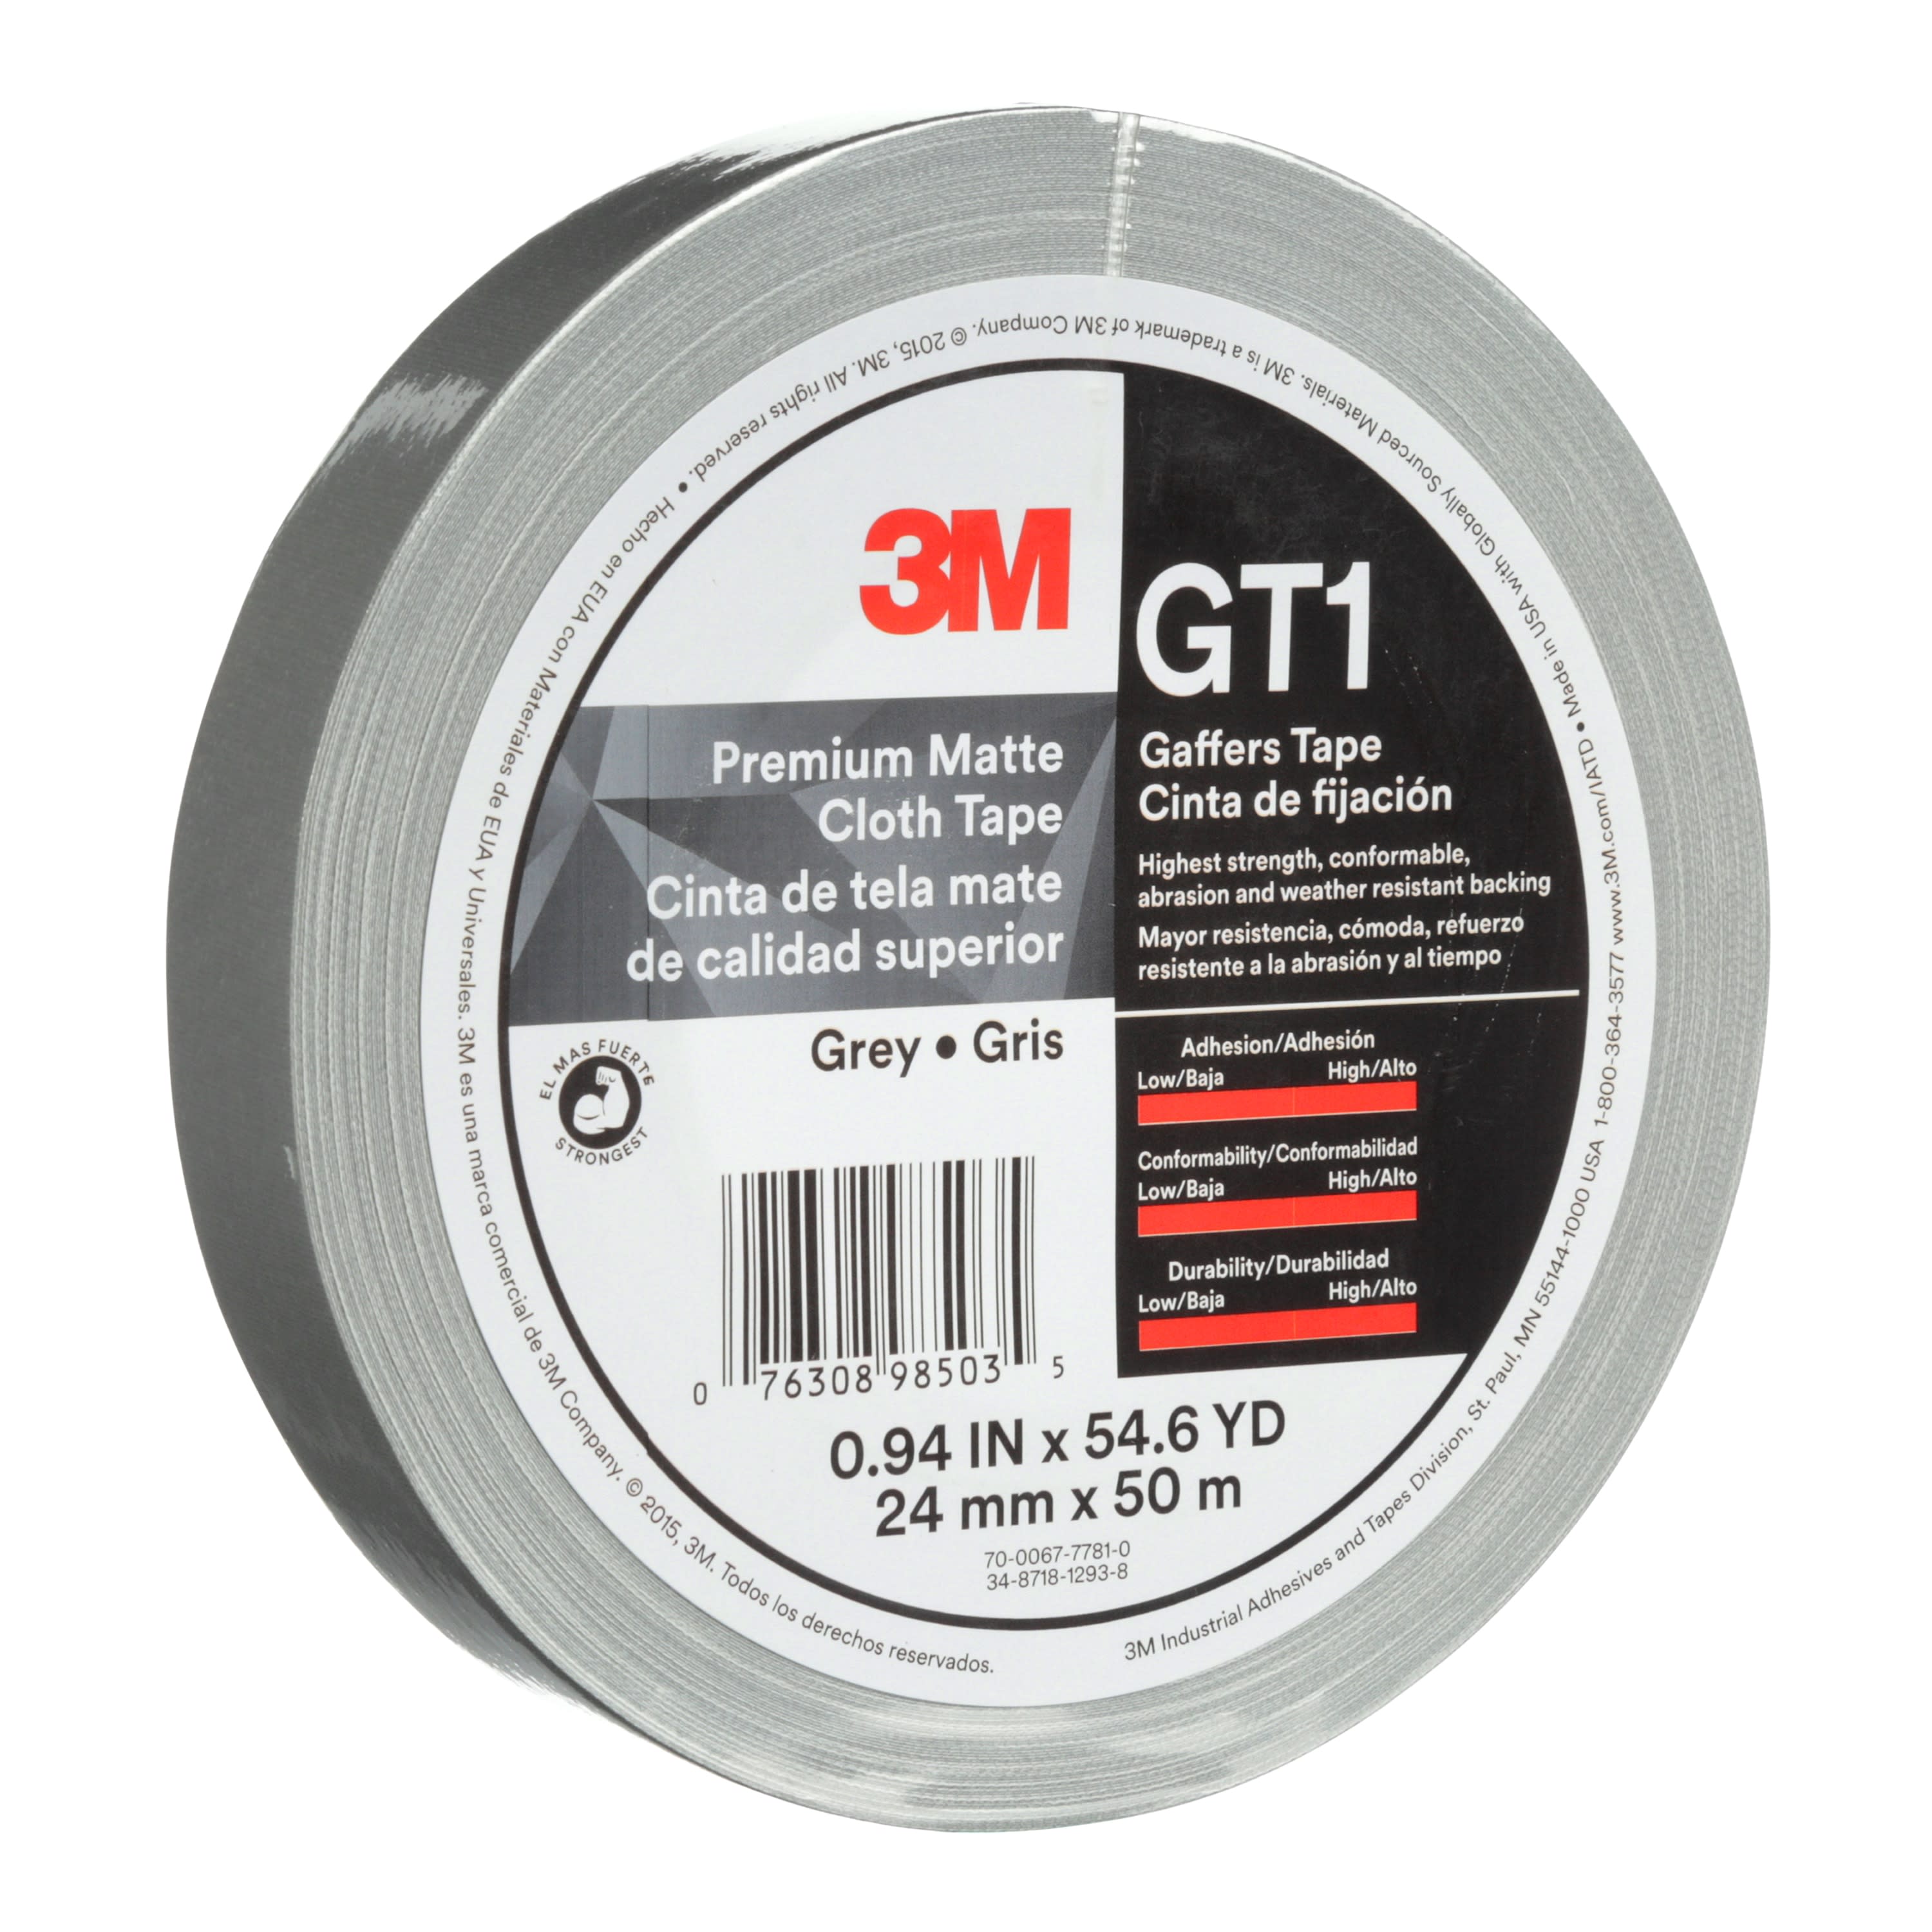 3M™ Premium Matte Cloth (Gaffers) Tape GT1, Gray, 24 mm x 50 m, 11 mil,
48 per case